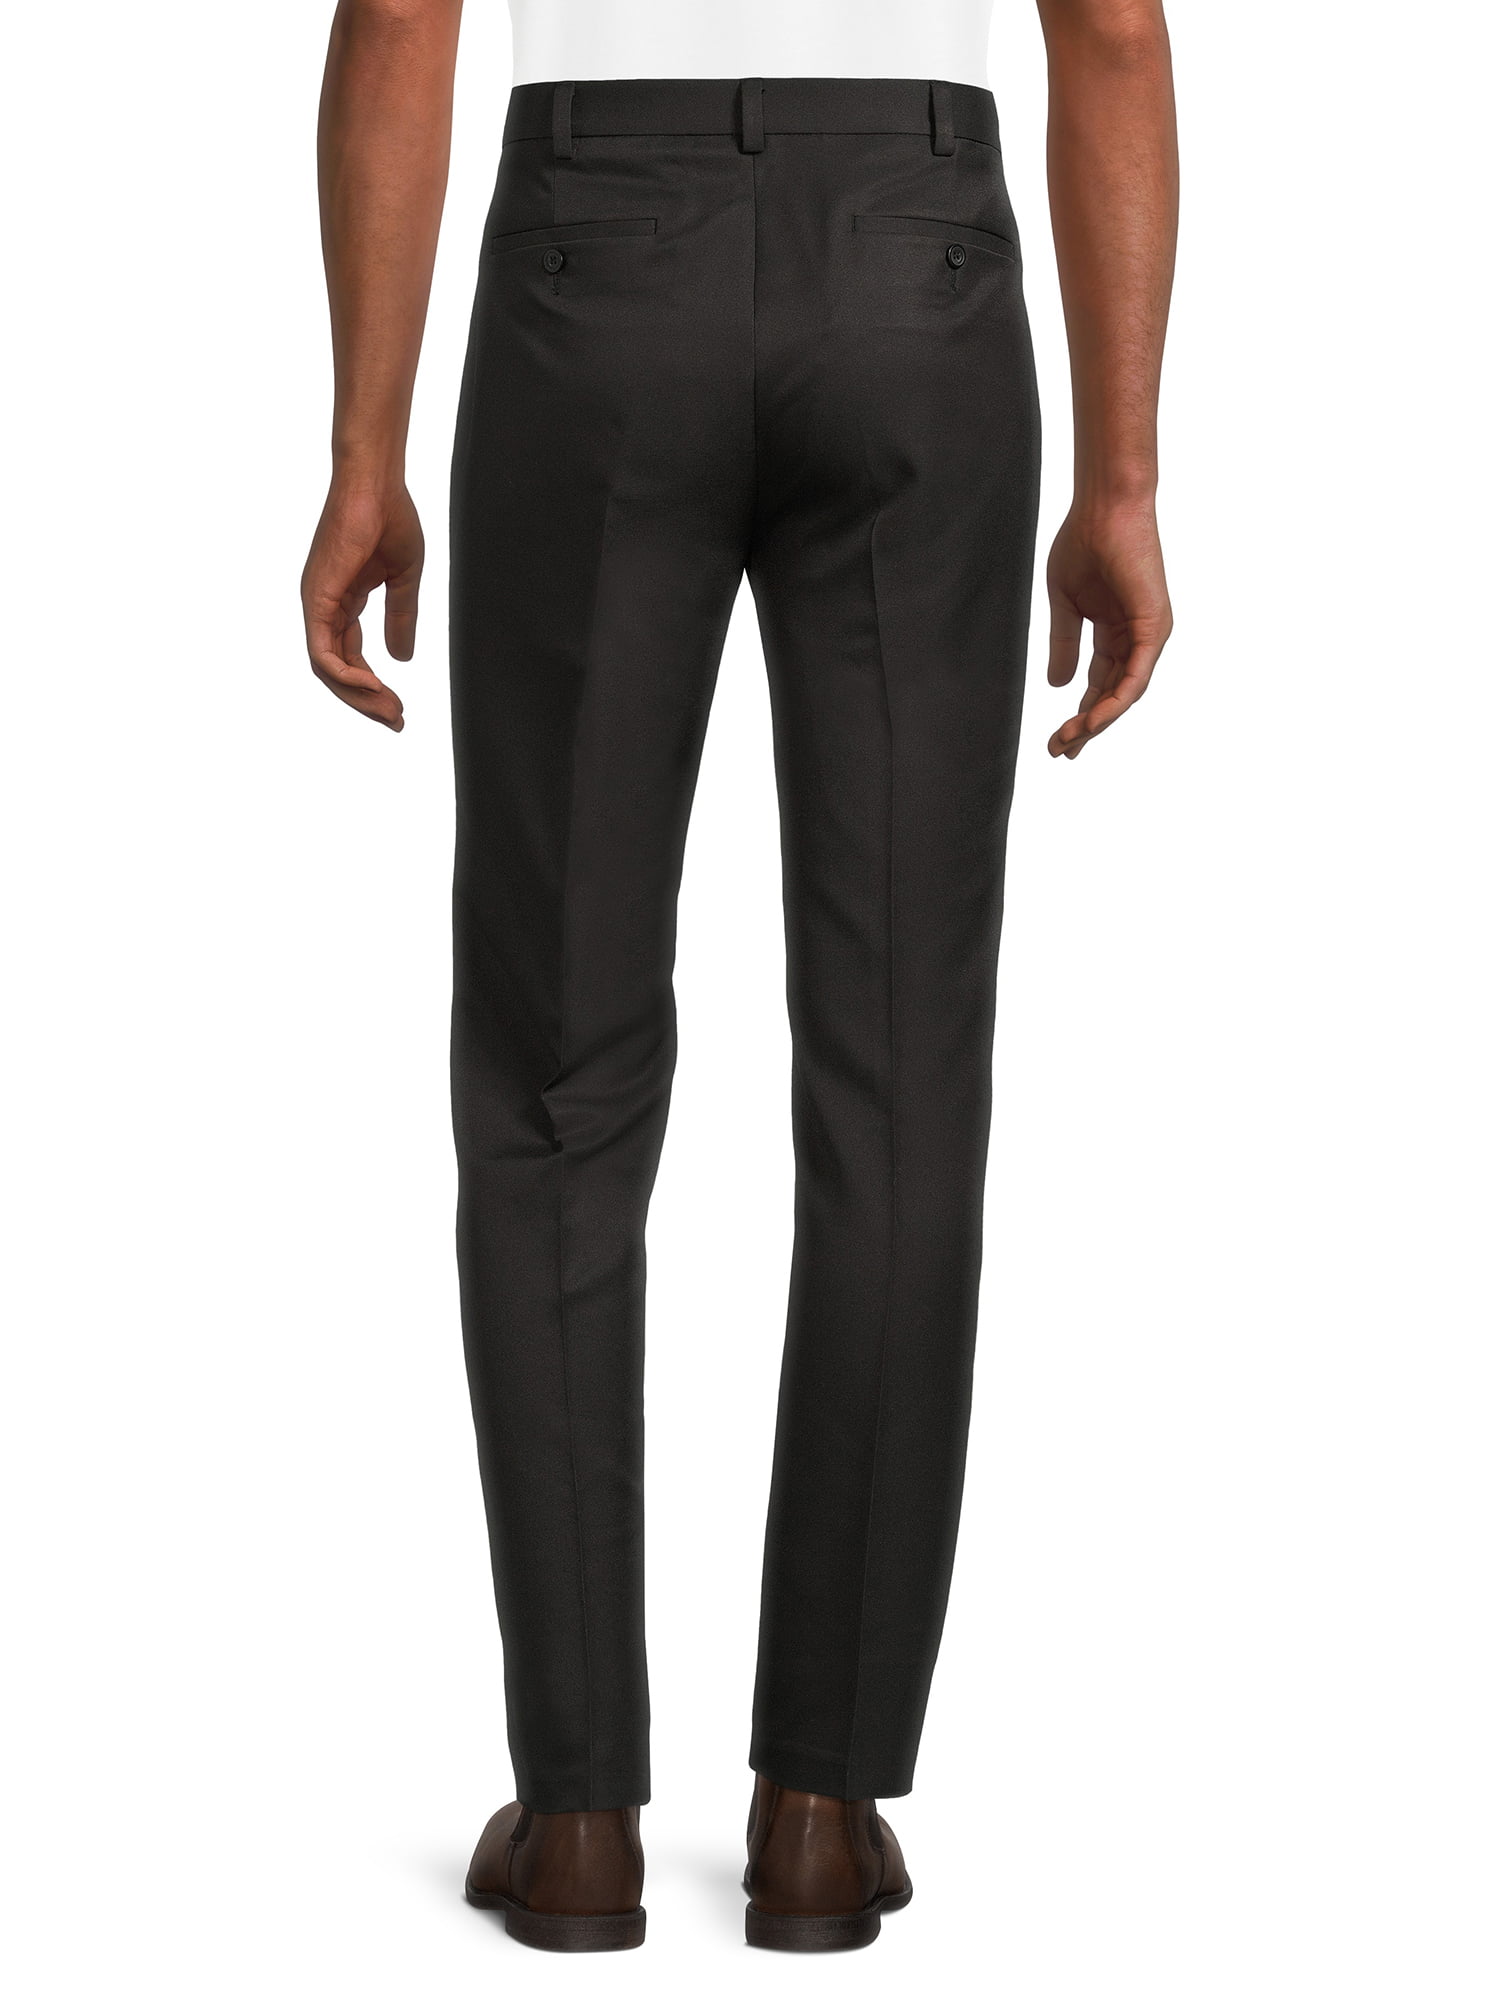 George Men's Slim Fit Flat Front Sorbtek Microfiber Dress Pants